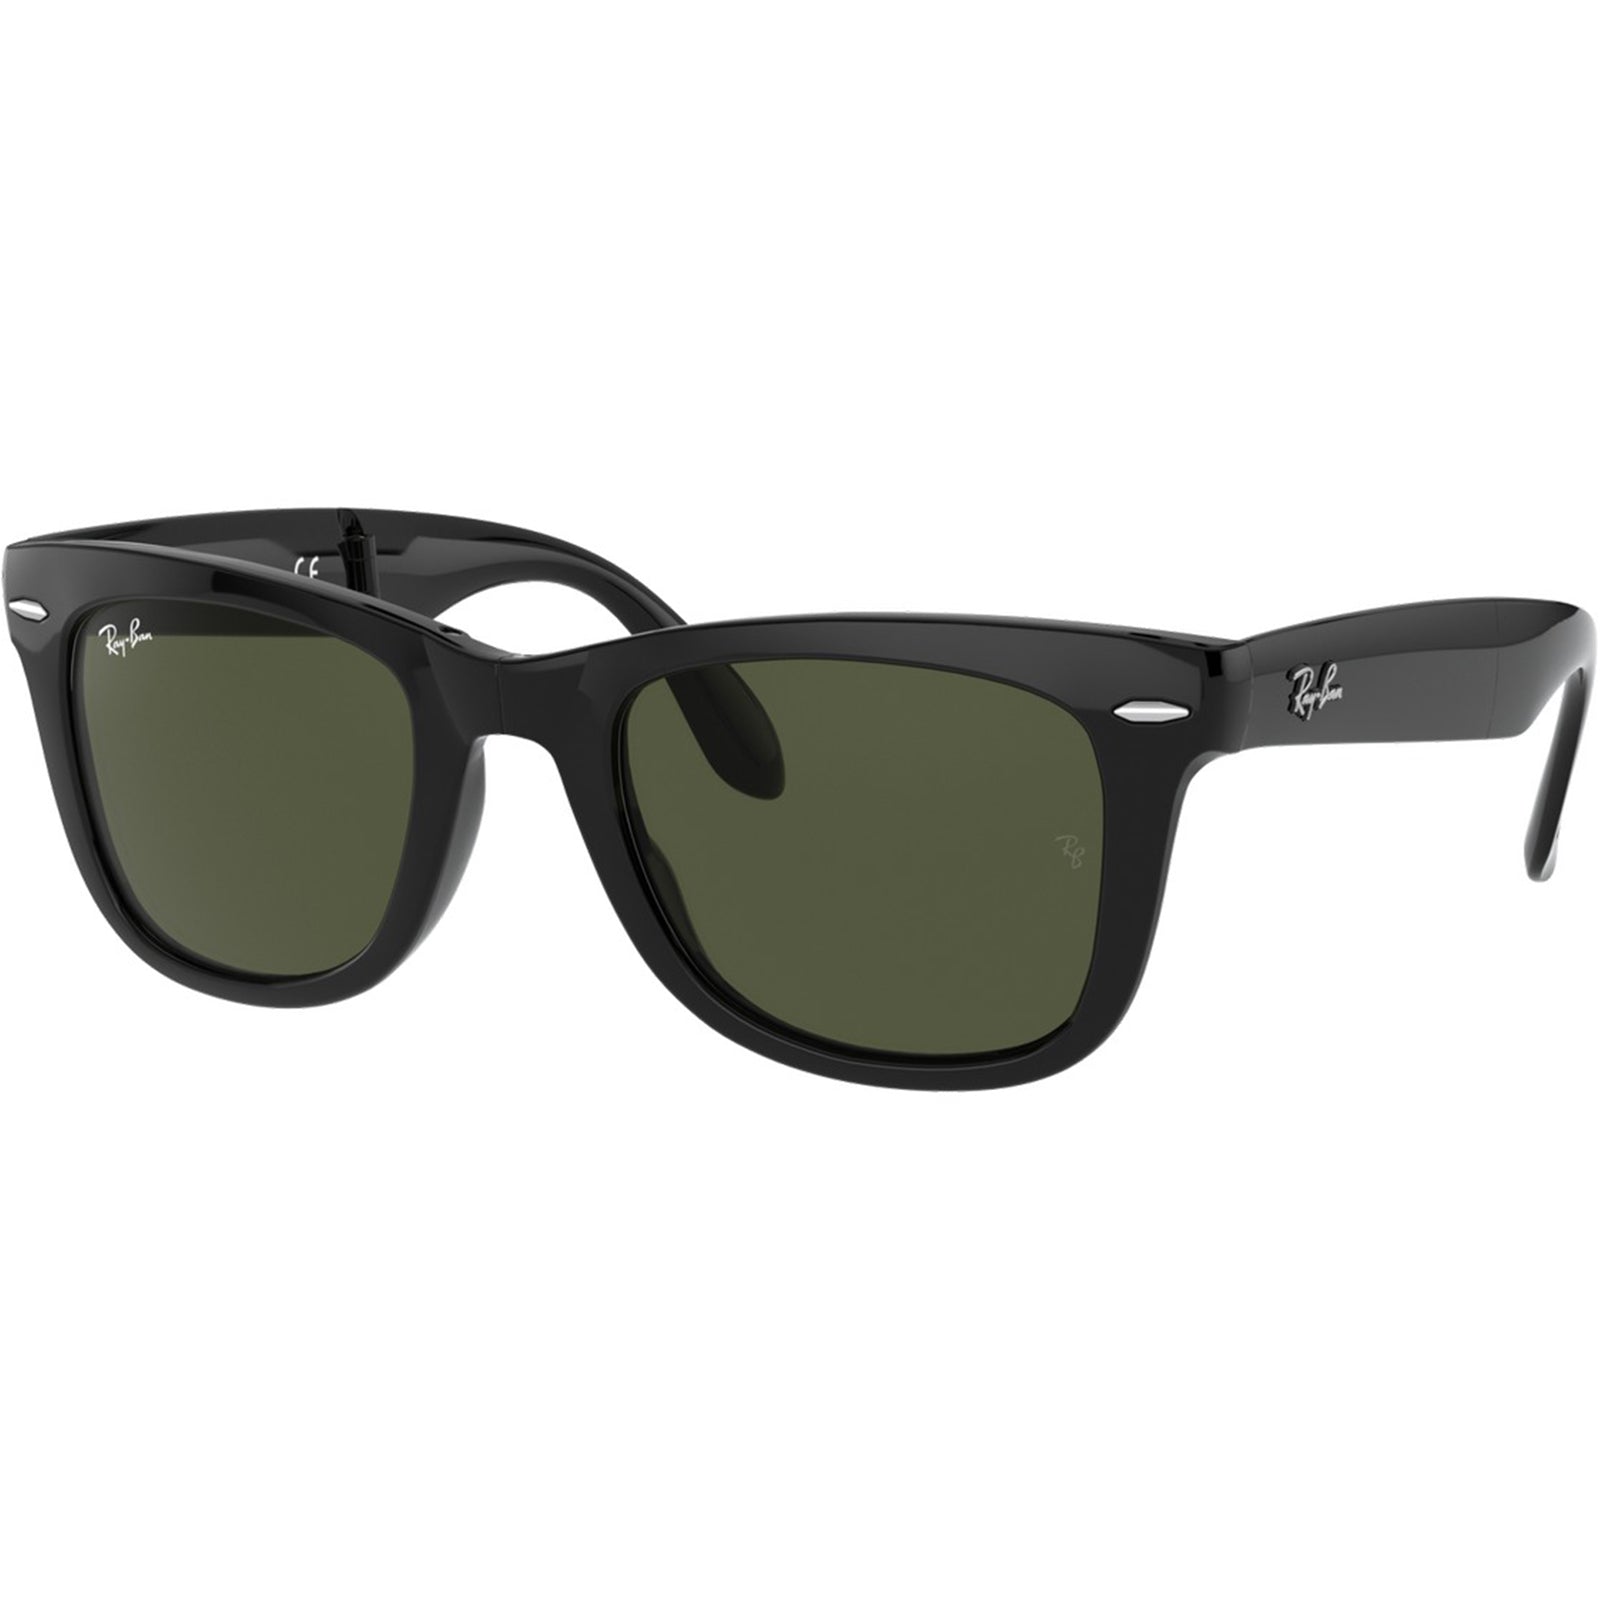 Ray-Ban Wayfarer Folding Classic Adult Lifestyle Sunglasses-0RB4105